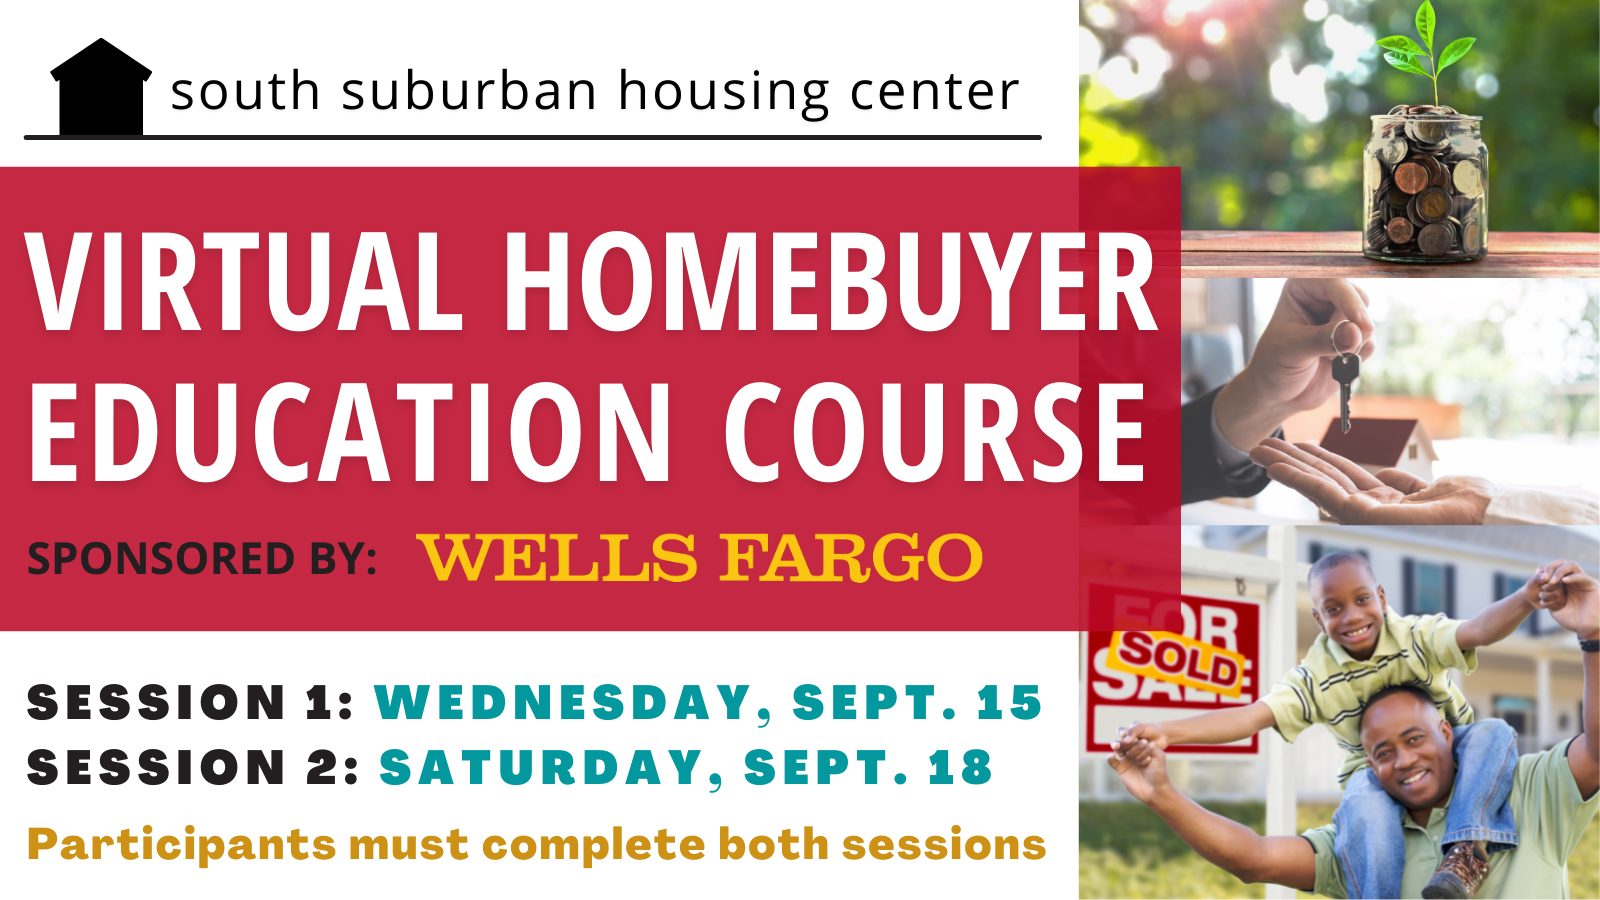 Homebuyer Education Courses South Suburban Housing Center